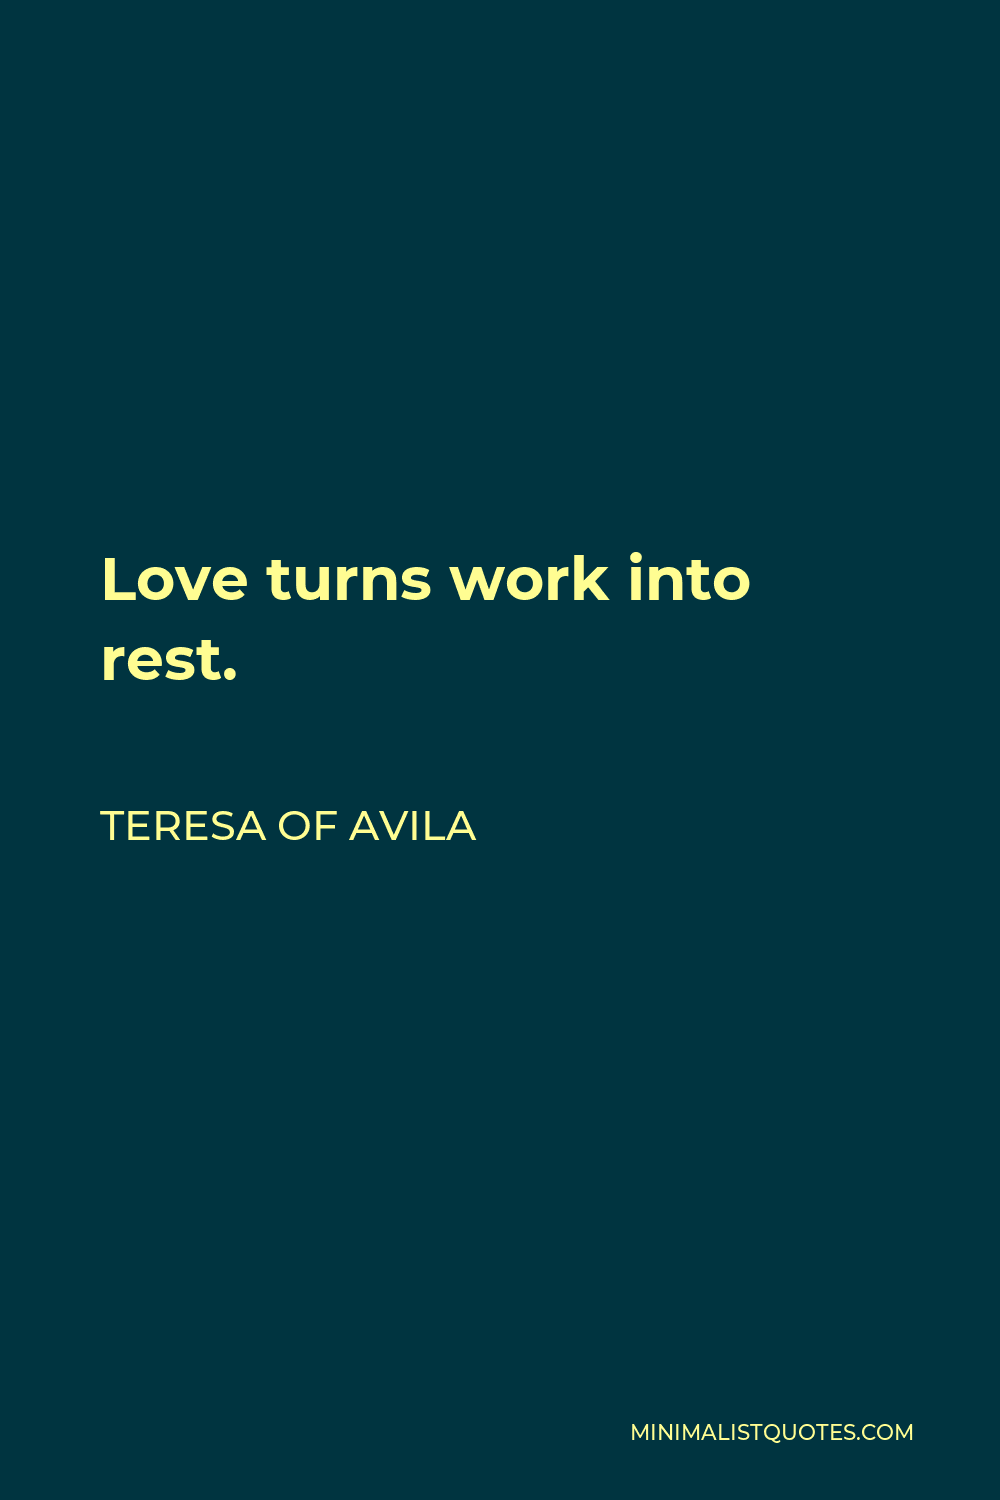 Teresa of Avila Quote - Love turns work into rest.